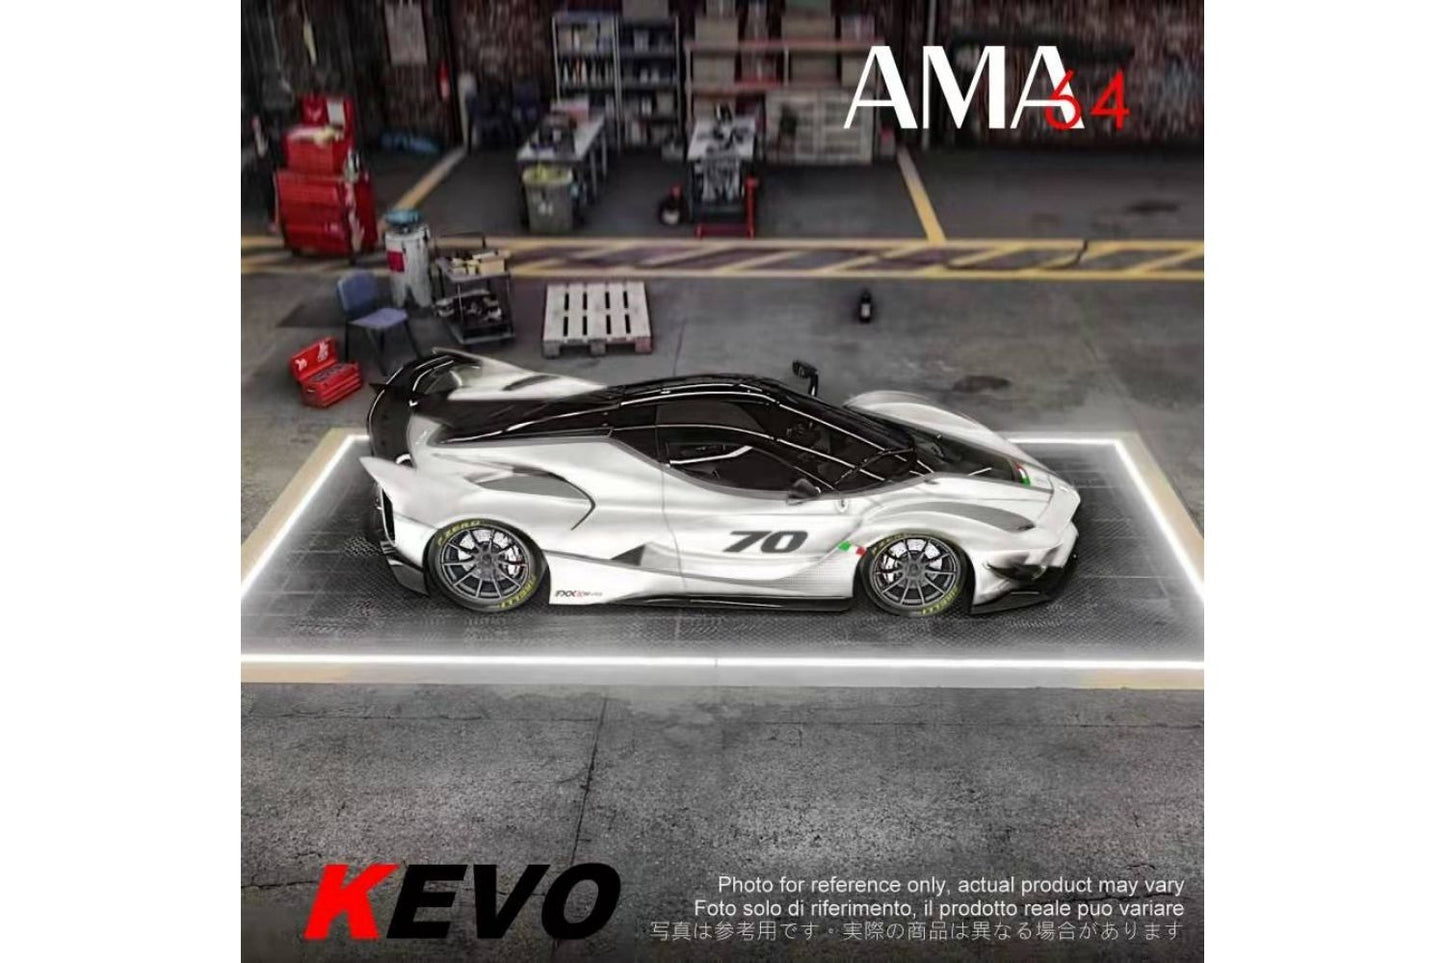 AMA64 1/64 Ferrari FXX-K EVO in White 70 weeks Korean Edition